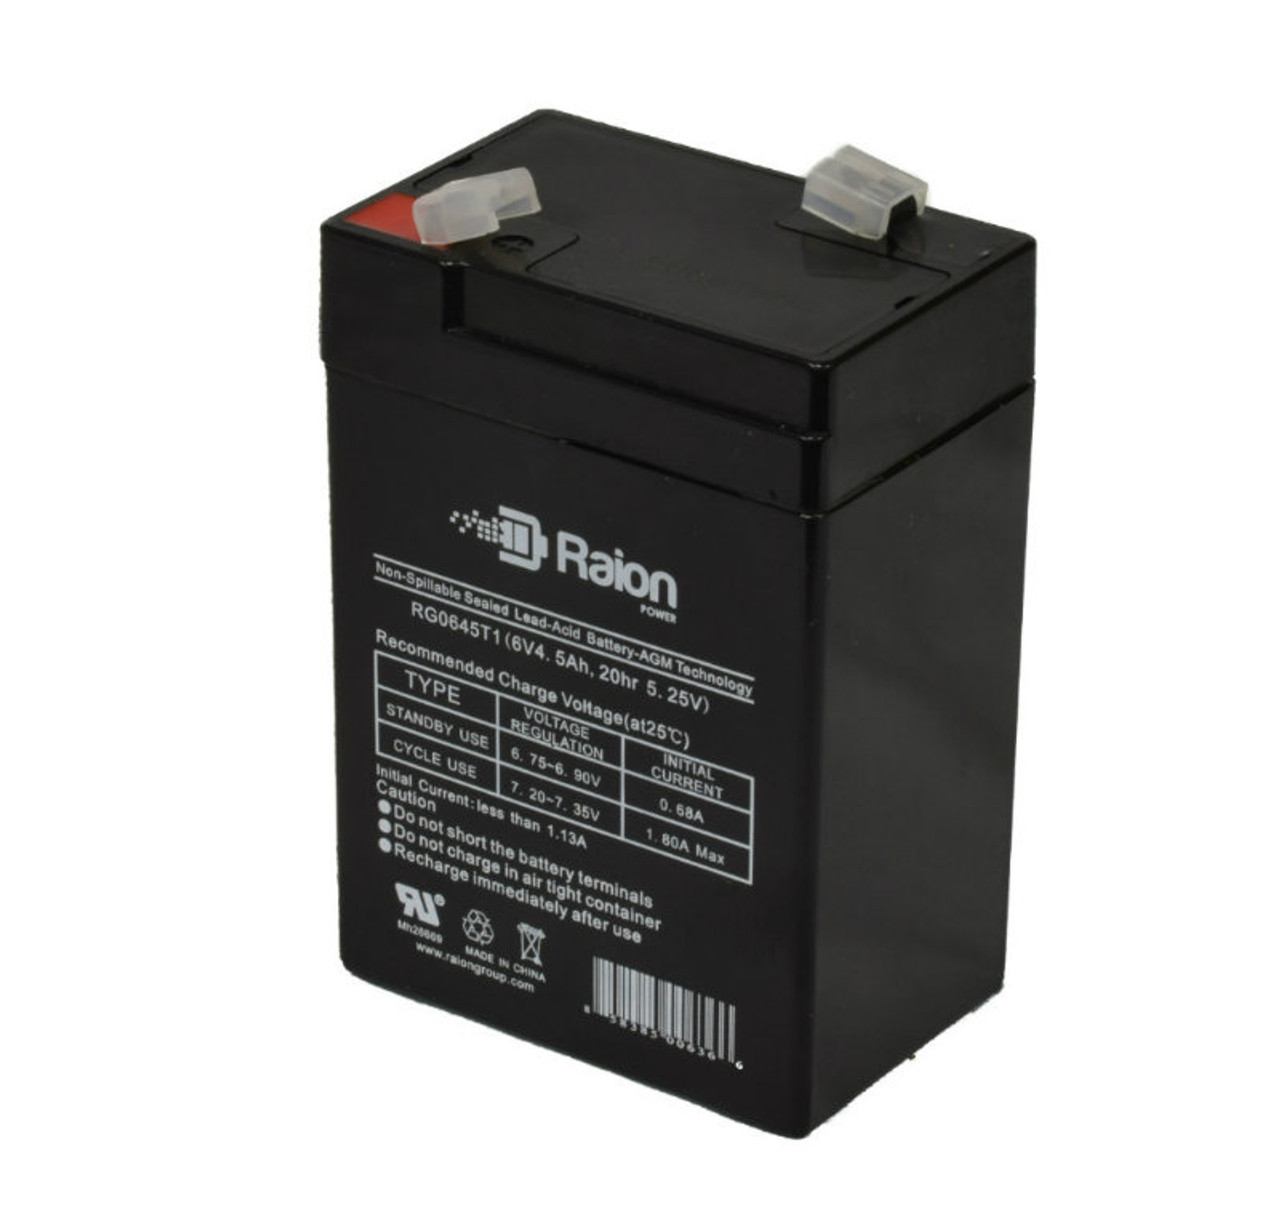 Raion Power RG0645T1 6V 4.5Ah Replacement Battery Cartridge for RIMA UN4-6